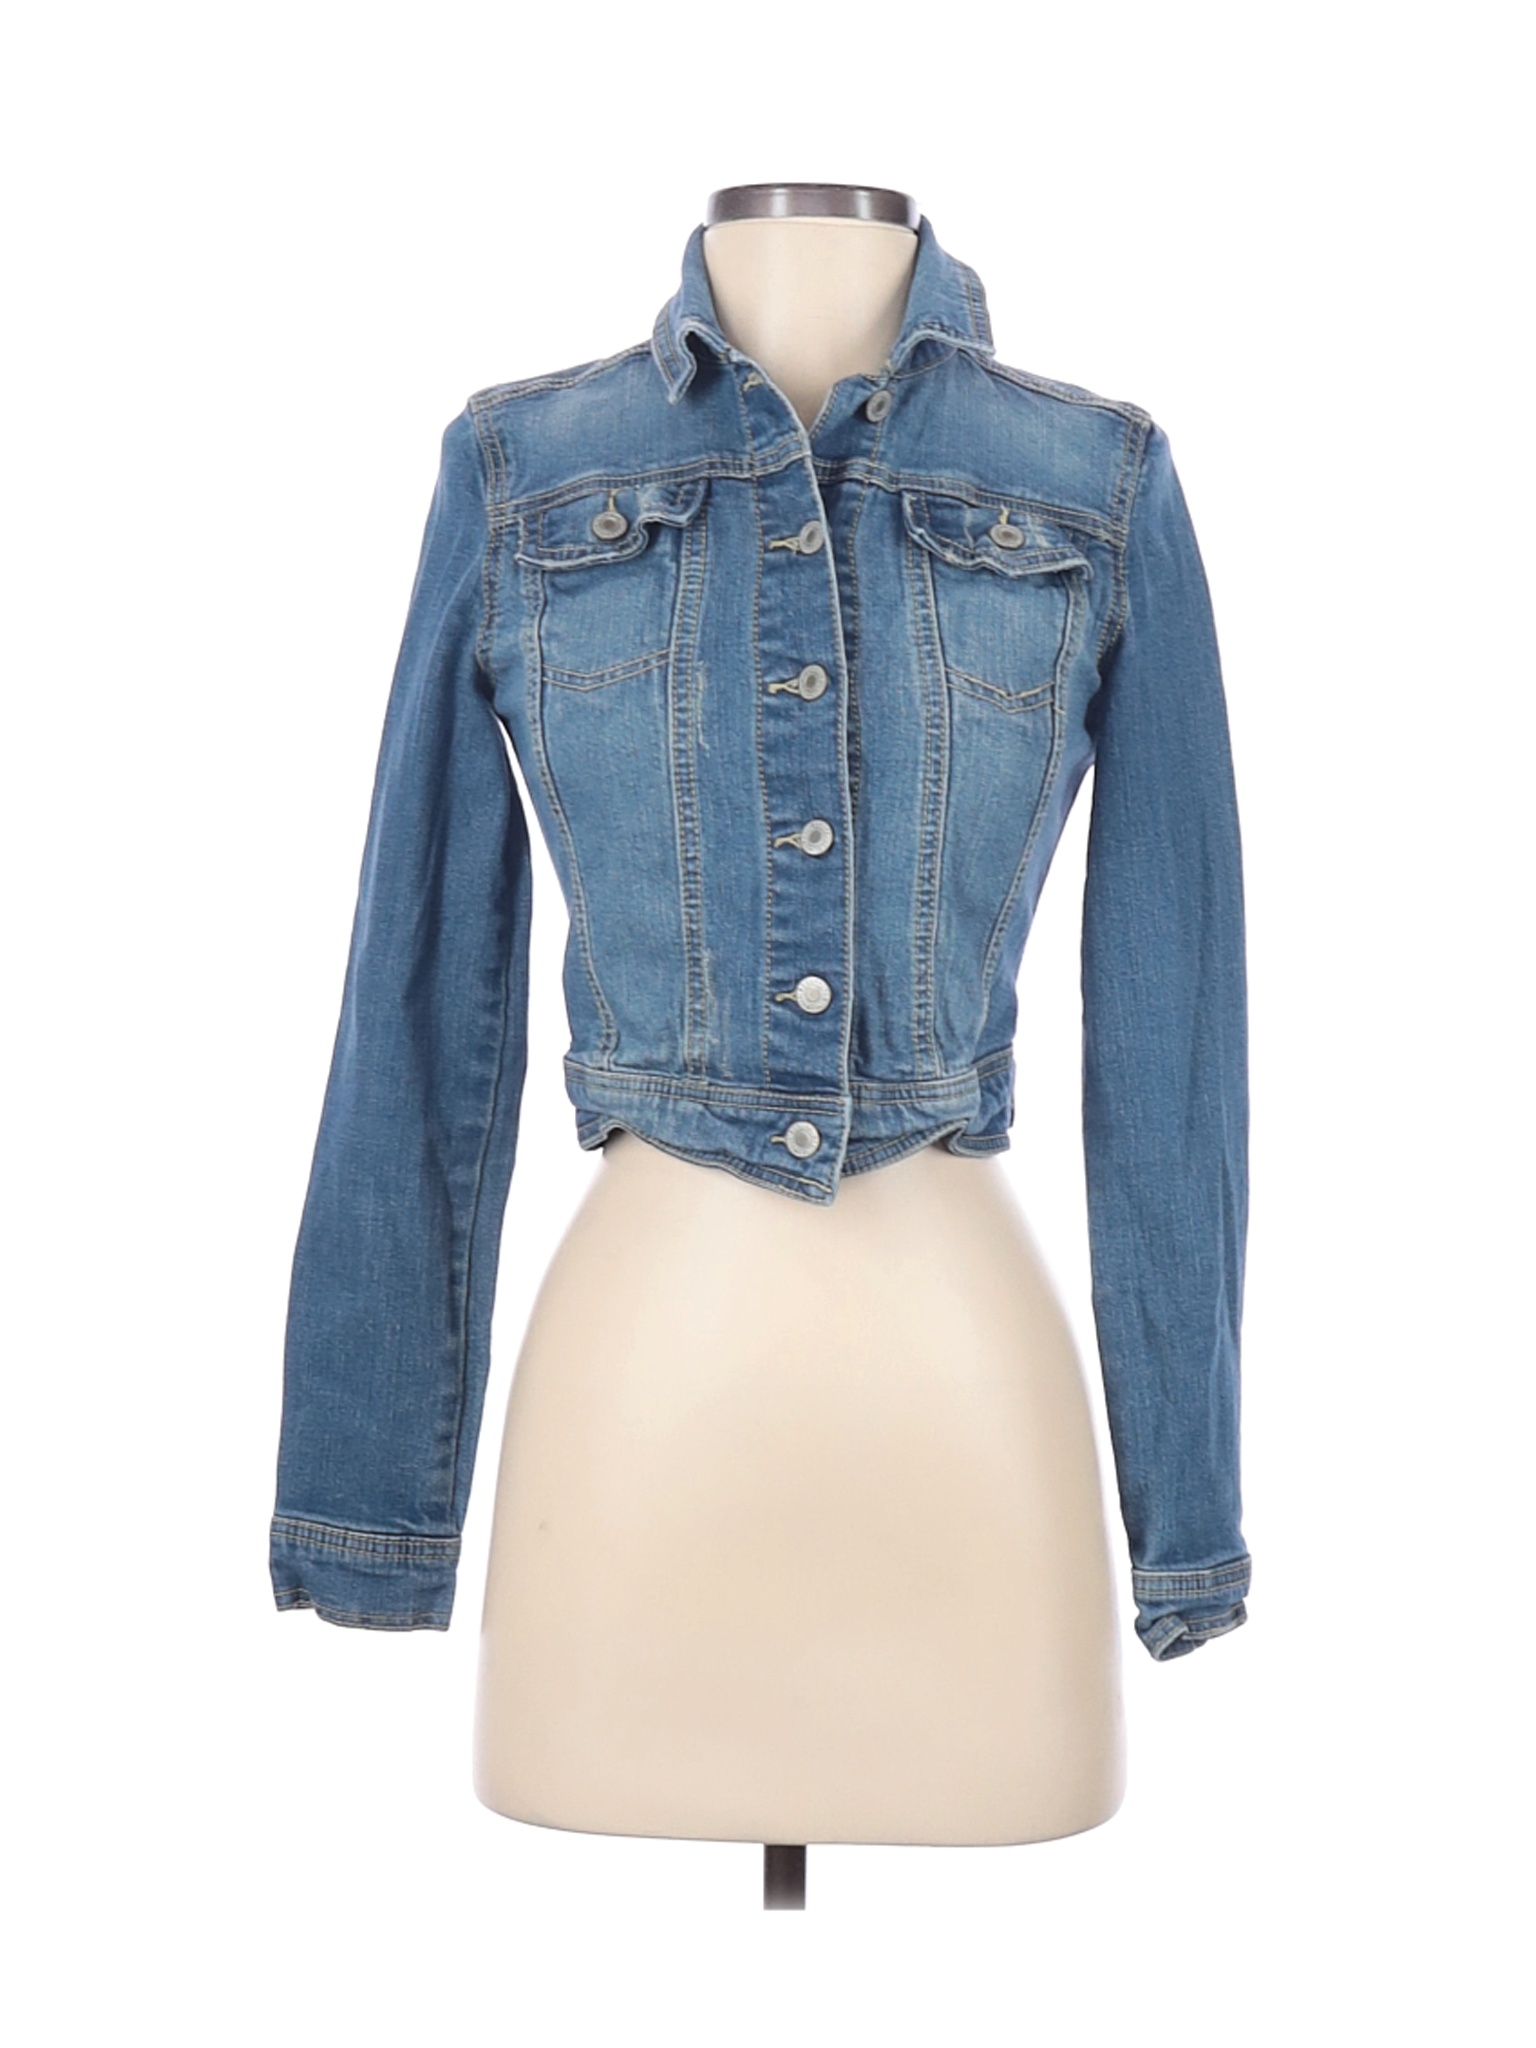 Mossimo Supply Co. Women Blue Denim Jacket XS | eBay